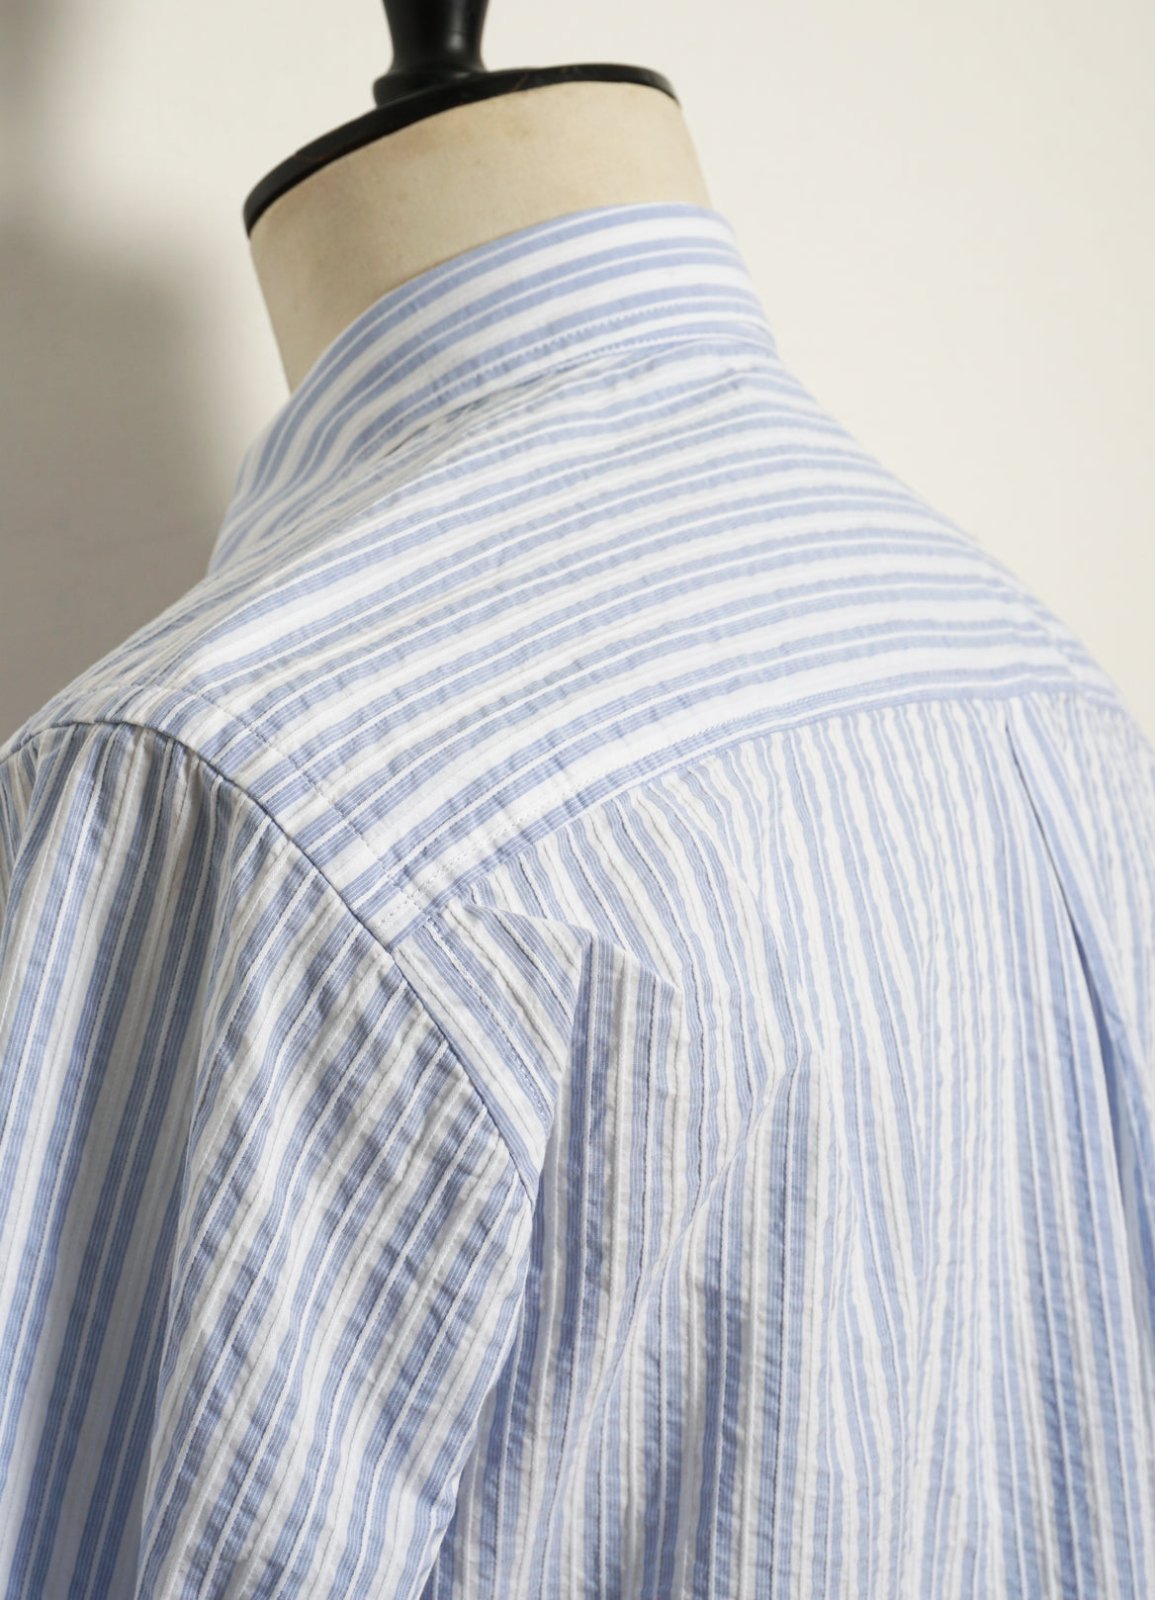 HANSEN GARMENTS - RAYMOND | Relaxed Classic Shirt | Big Blue Stripes - HANSEN Garments